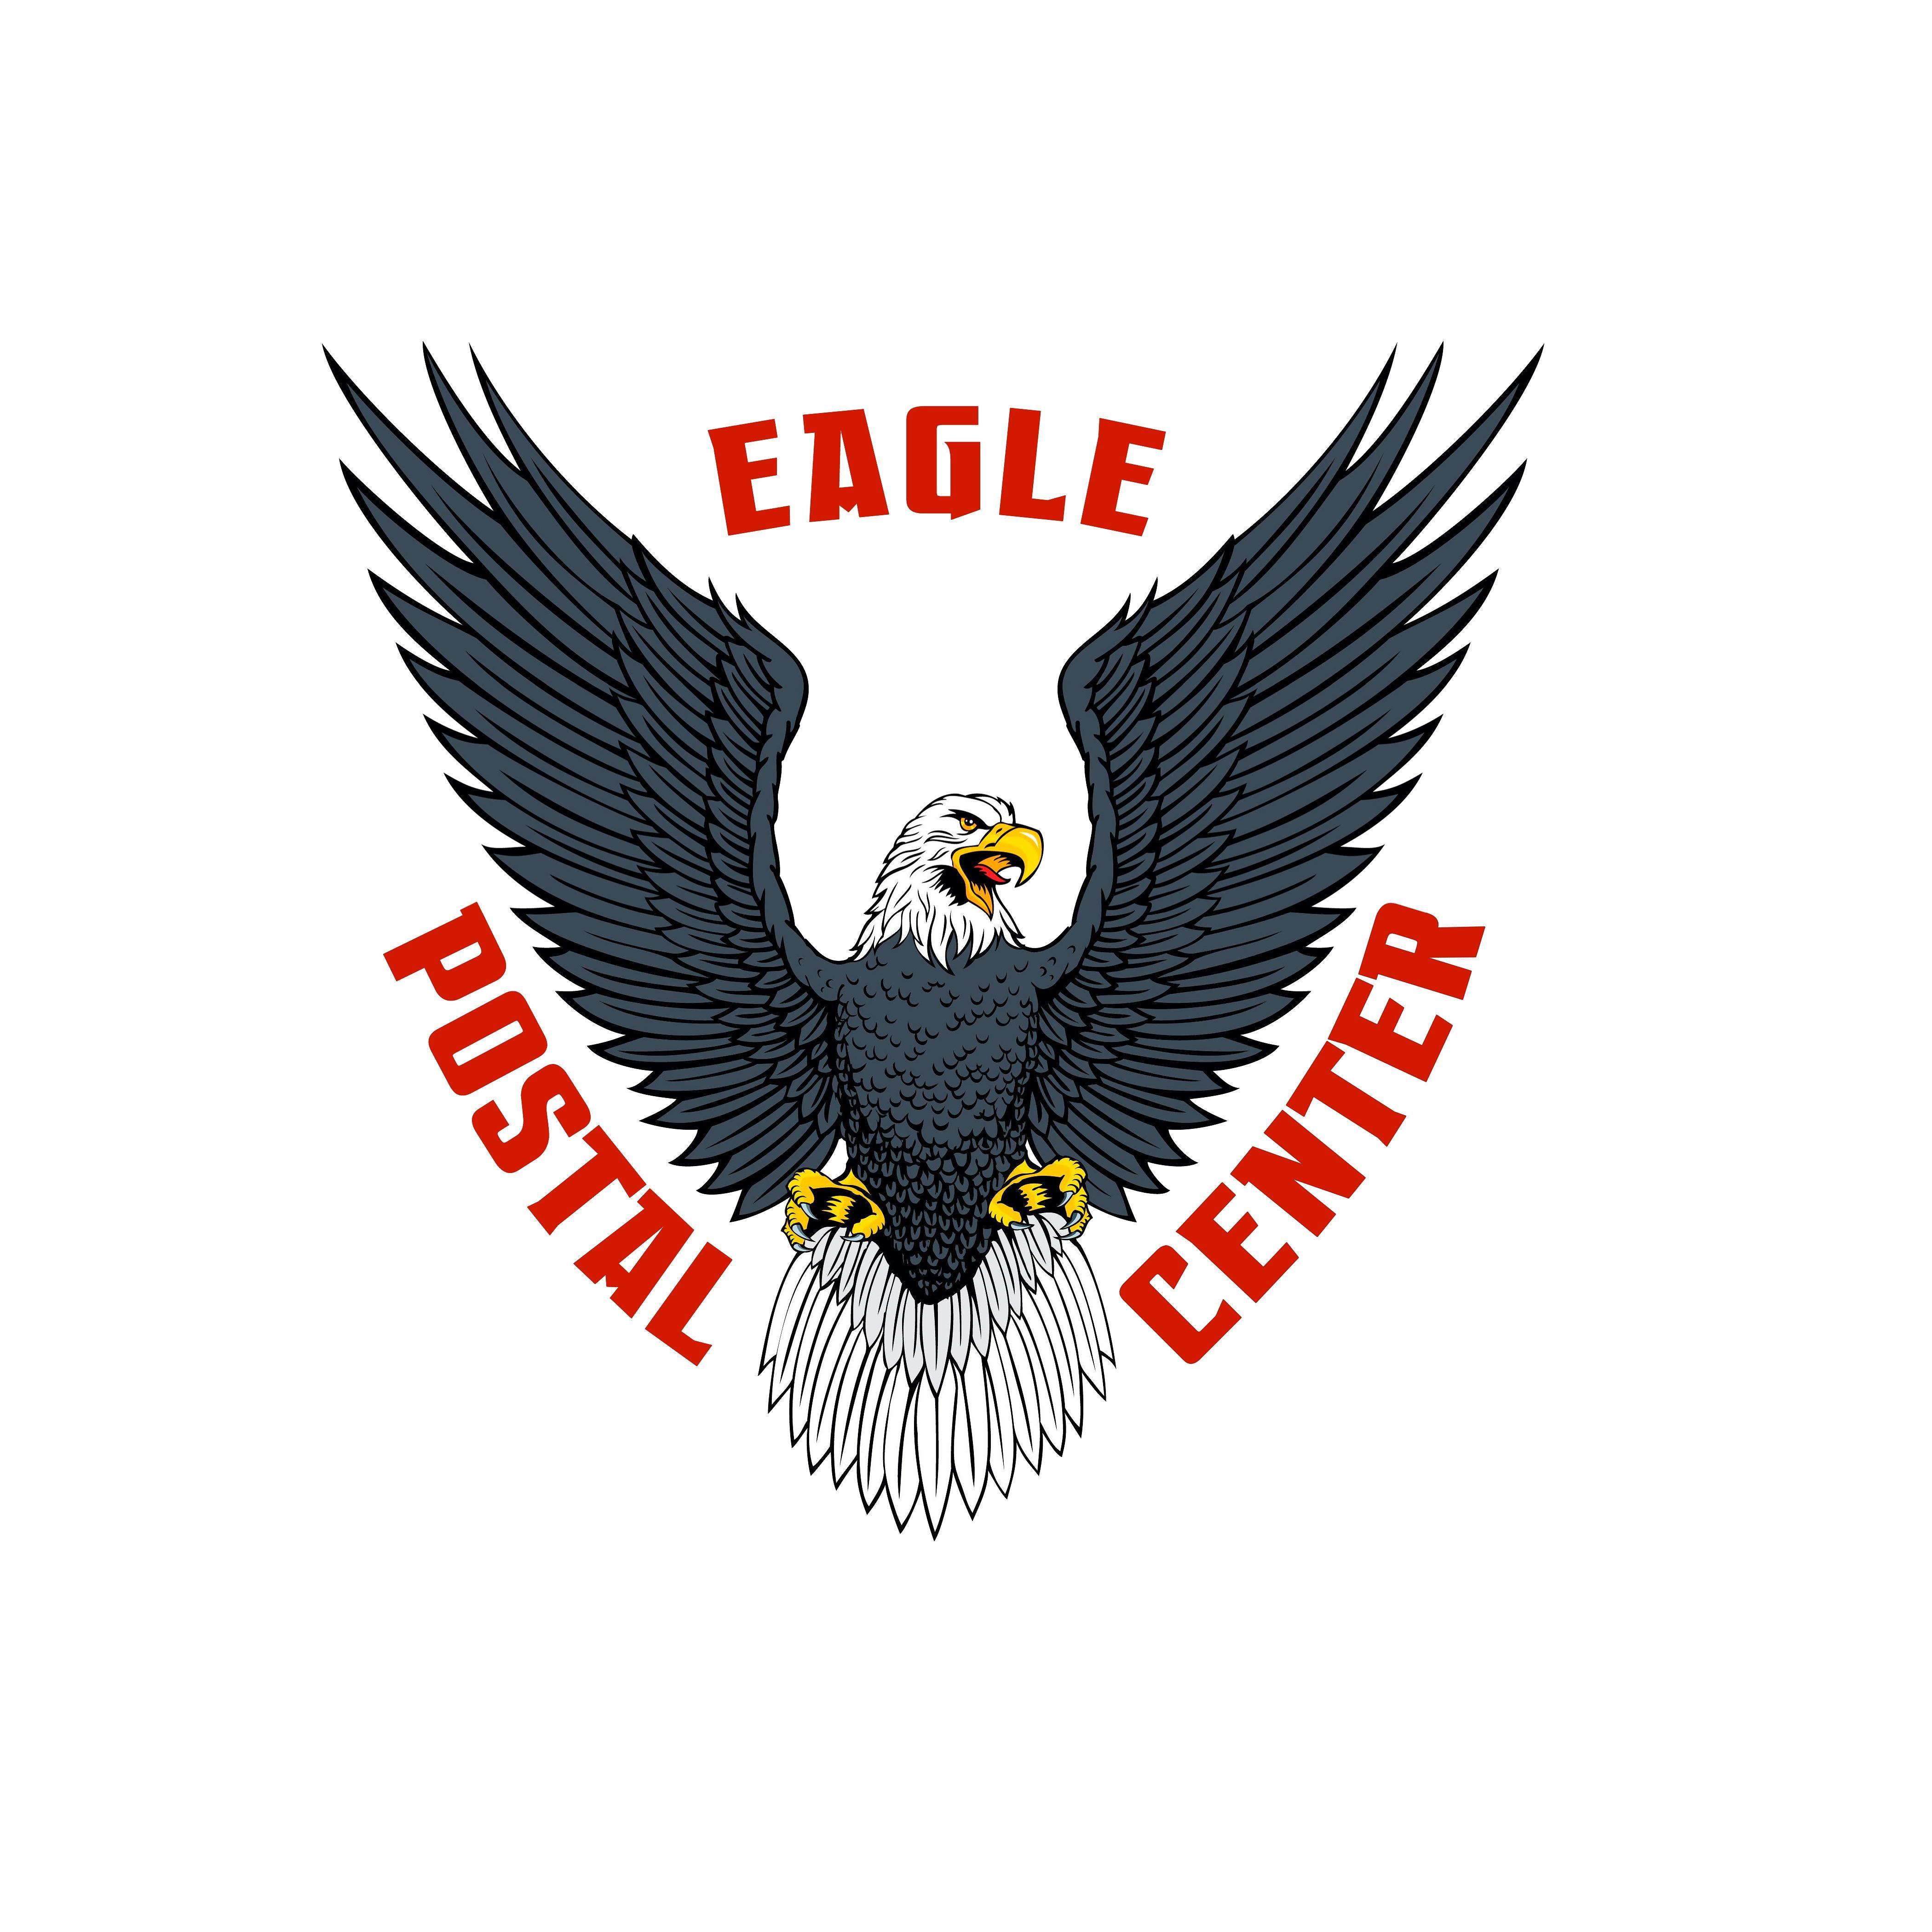 Postal Eagle Logo - Eagle Postal Center: Southlake, Fort Worth, TX: Post Office, Mailing